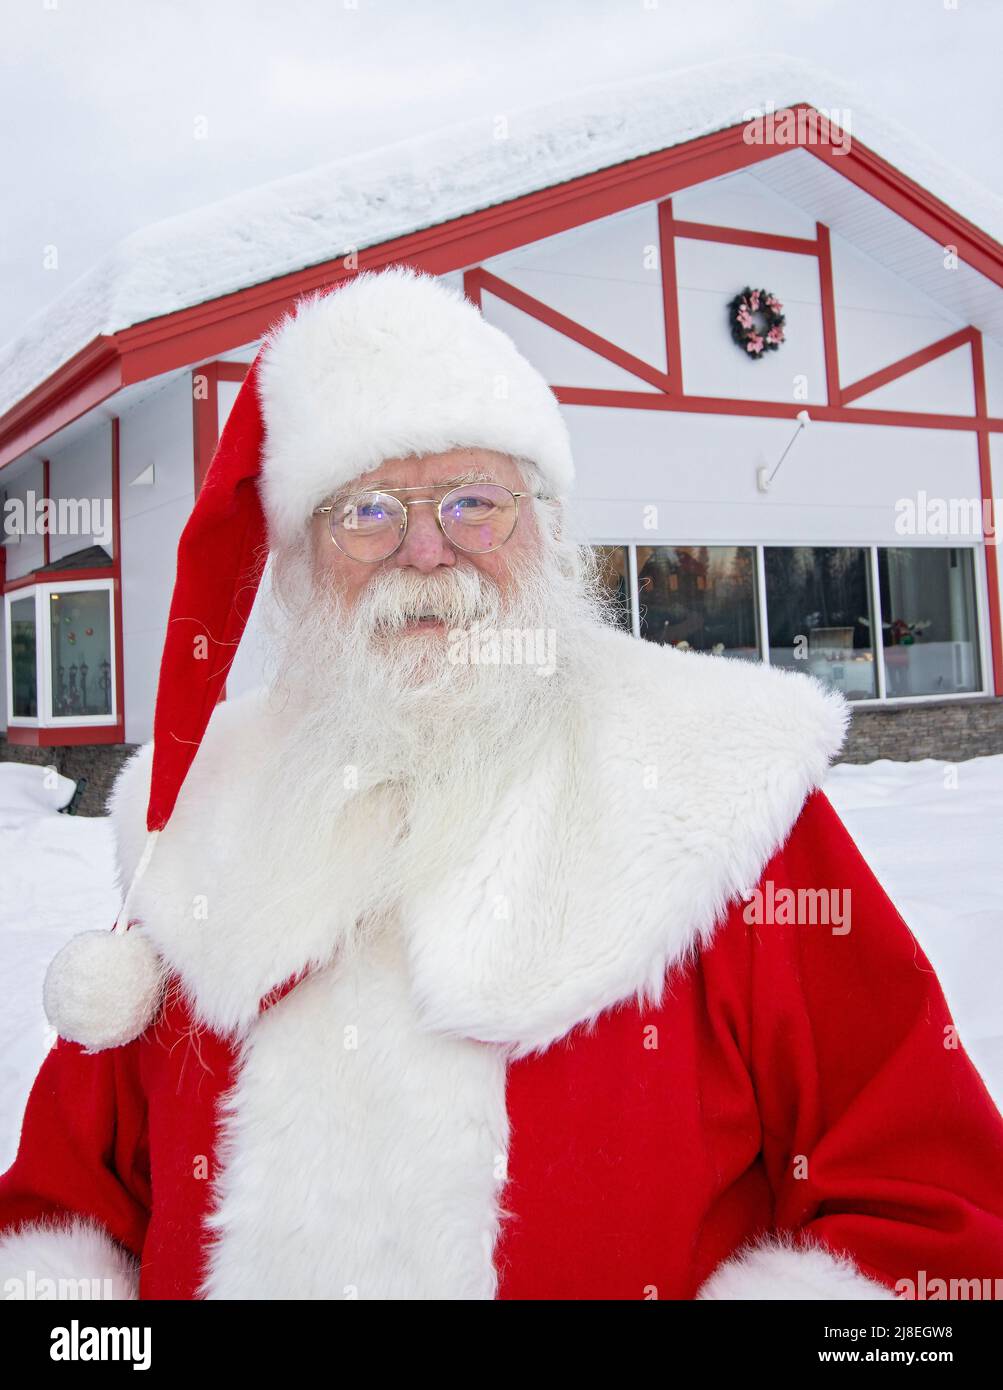 Santa Claus posó para fotos fuera de la Casa de Santa Claus en Polo Norte, AK, cerca de Fairbanks, AK. Foto de stock